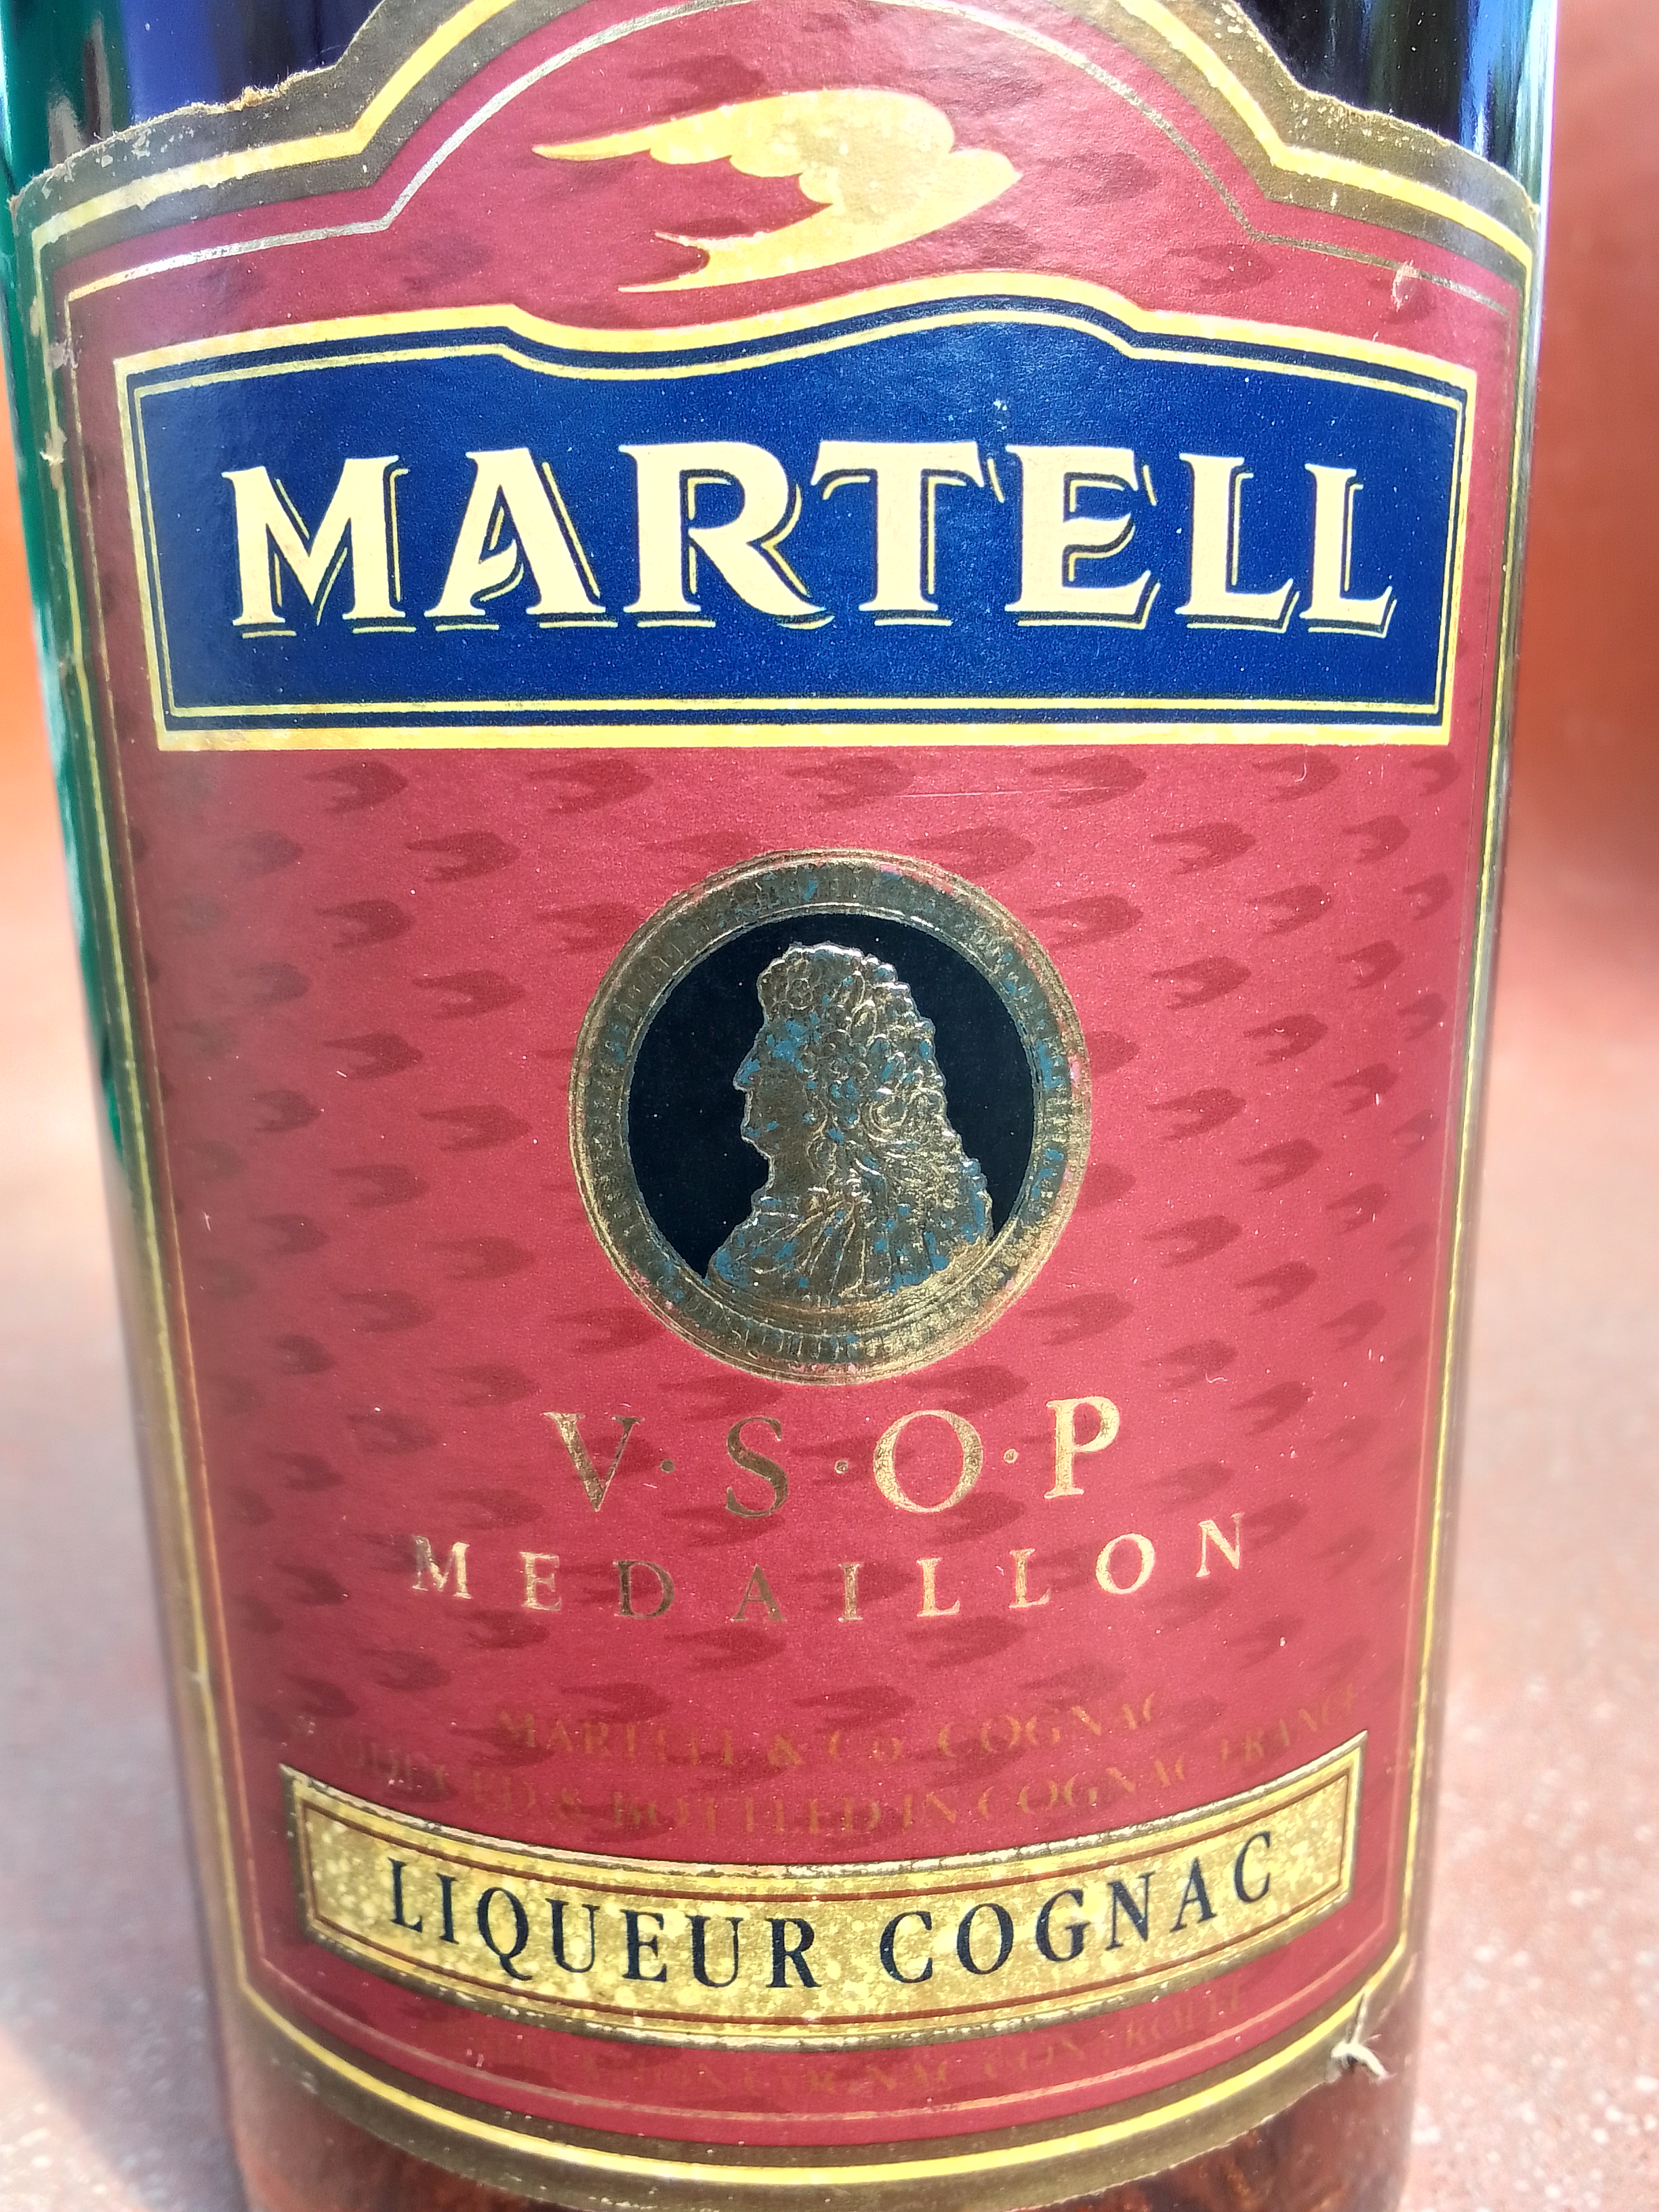 Martell Cognac Martell, Medaillon VSOP, Liqueur Cognac.5